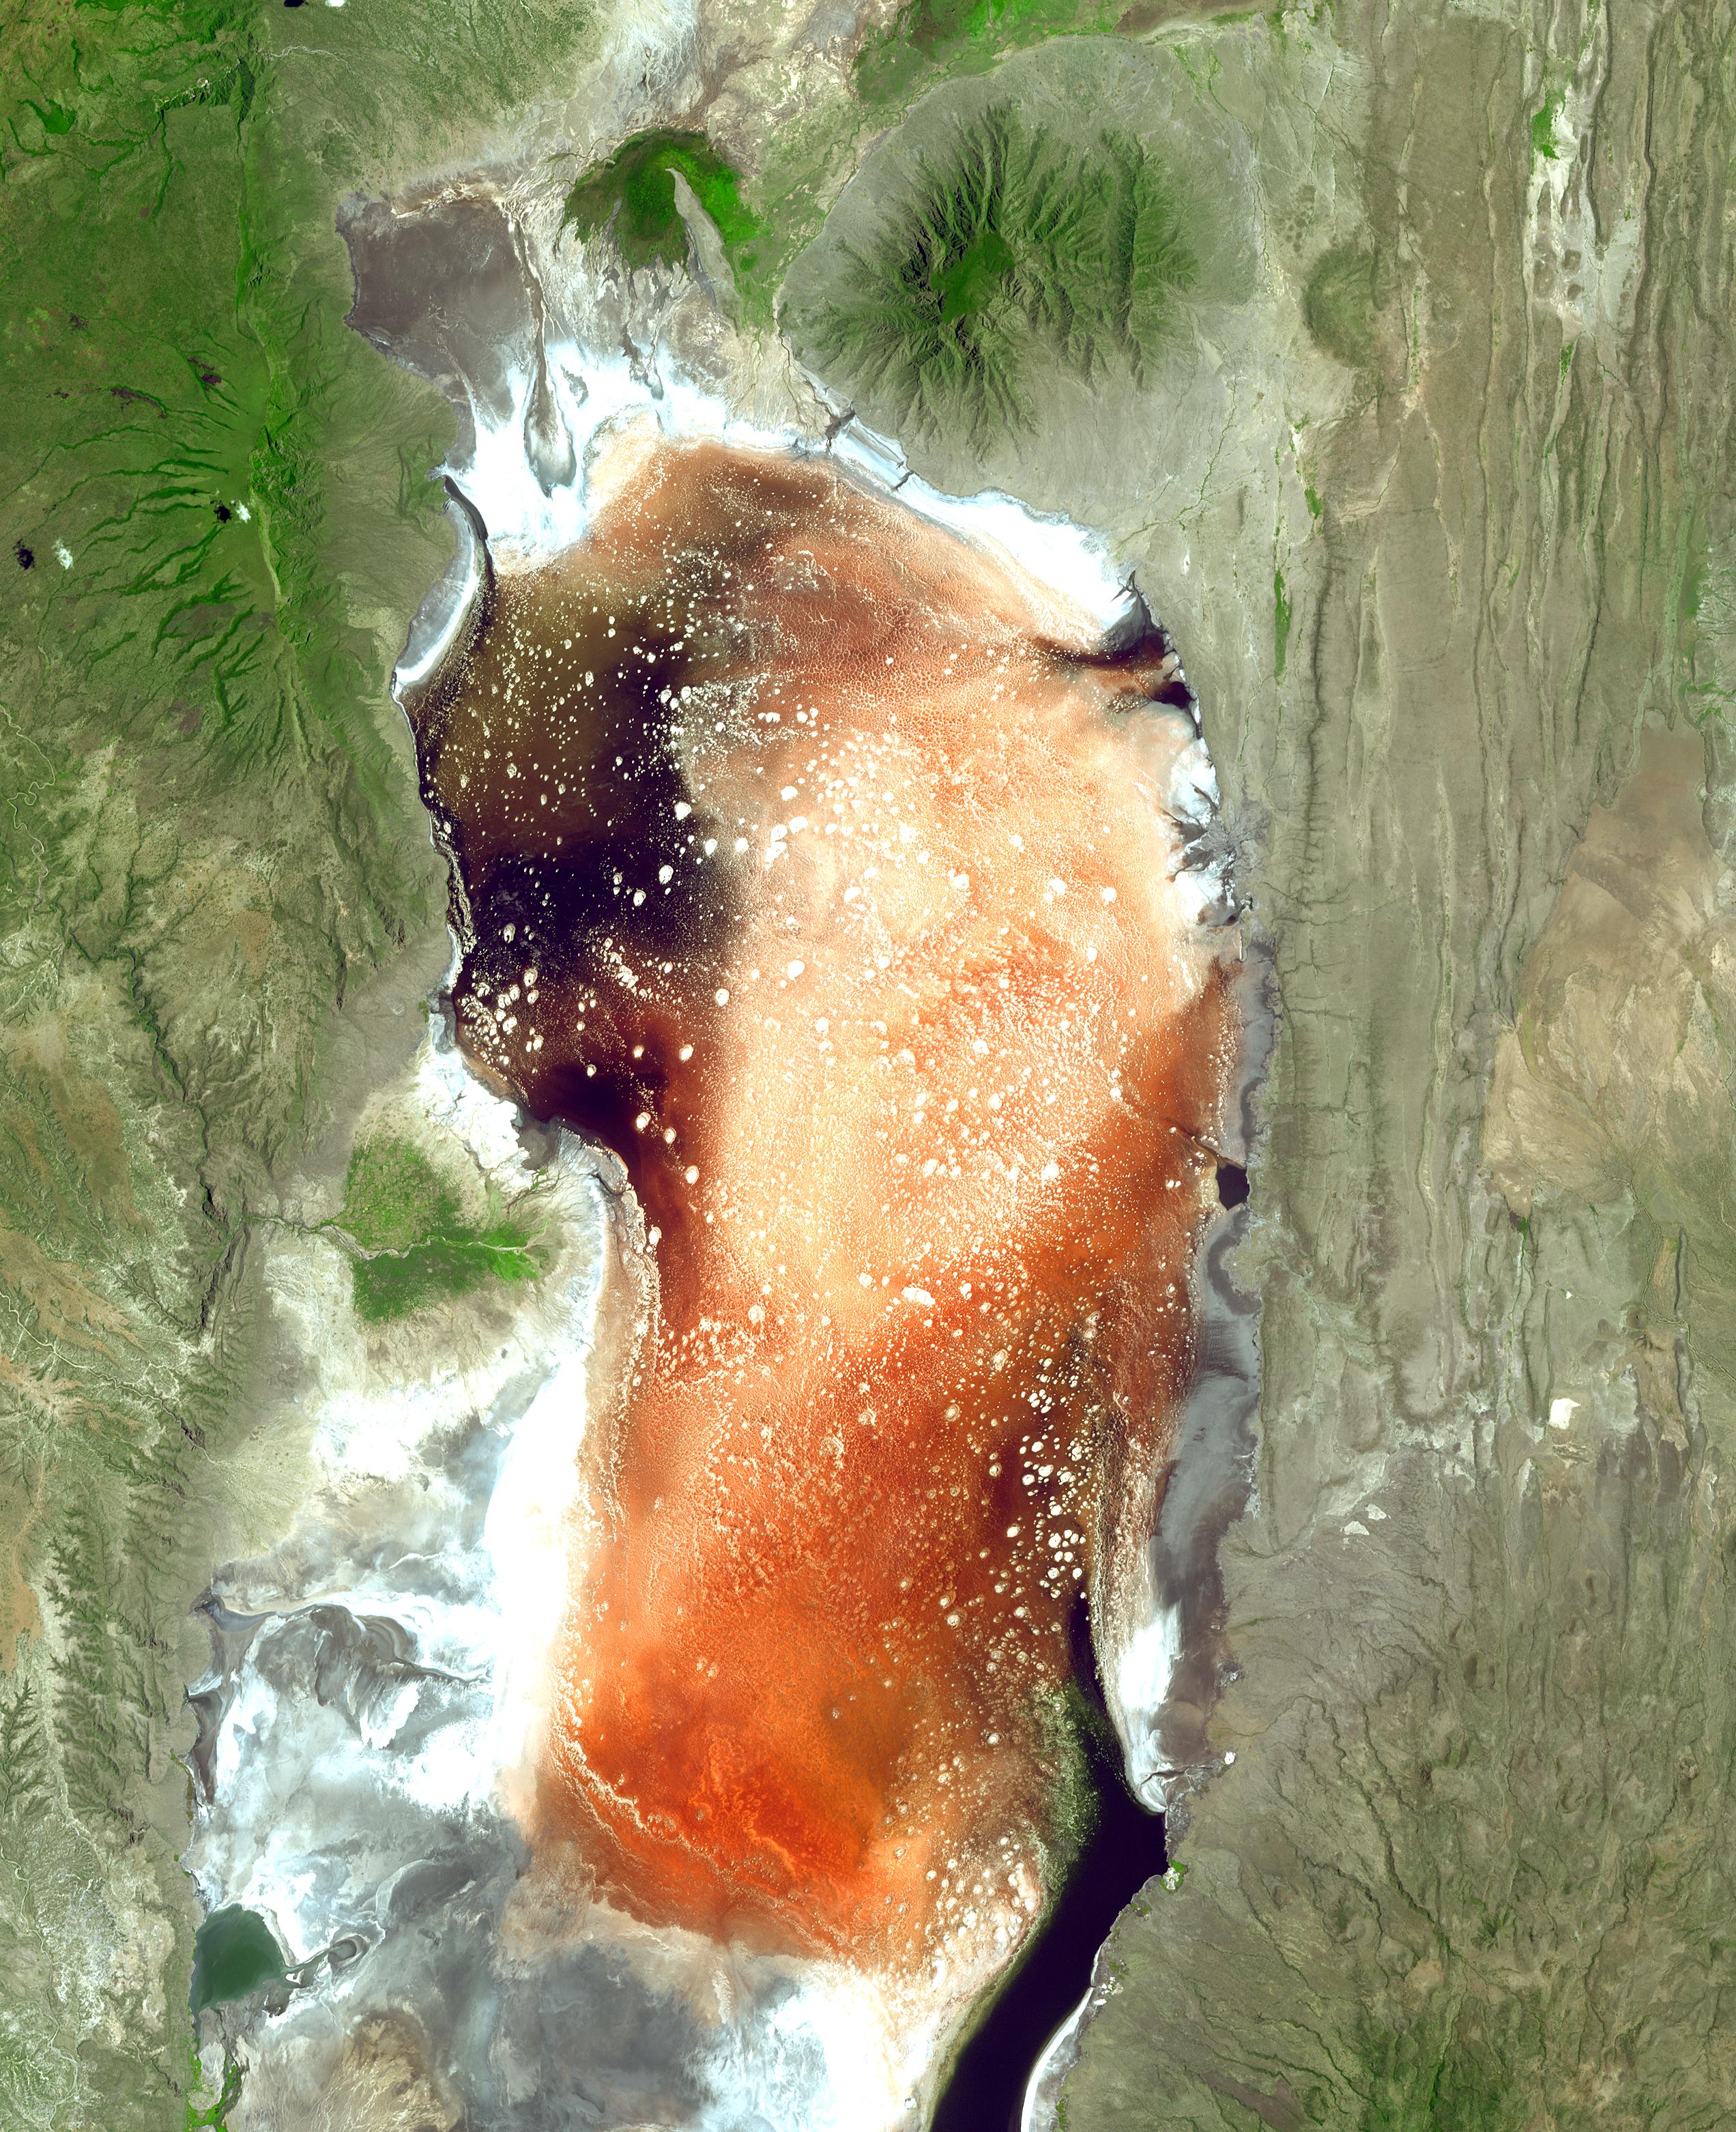 Lake Natron, Tanzania